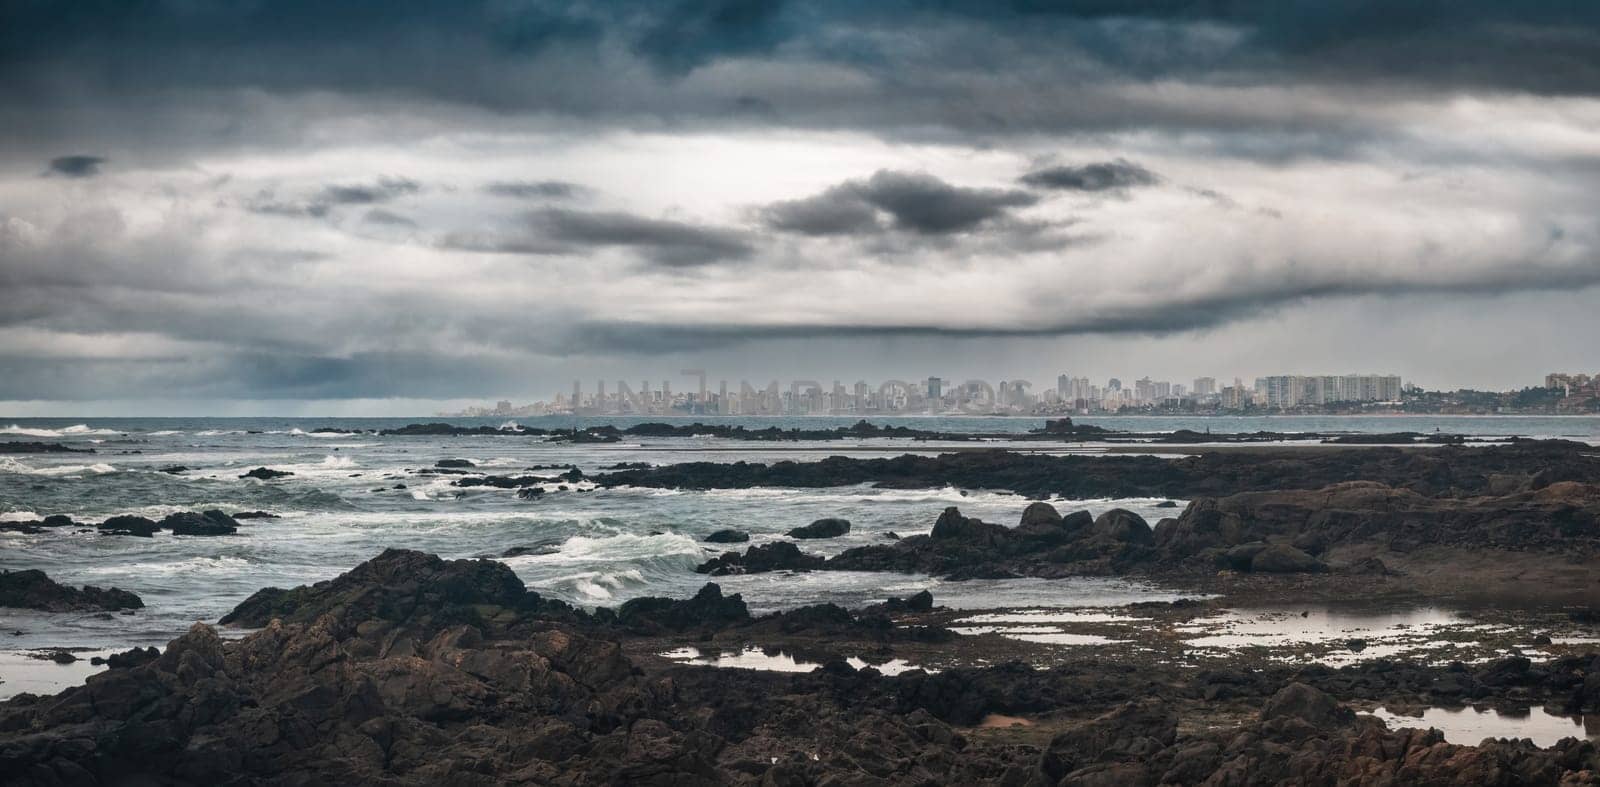 Dramatic clouds hang above a rocky coastline with a far-off urban skyline of Salvador de Bahia